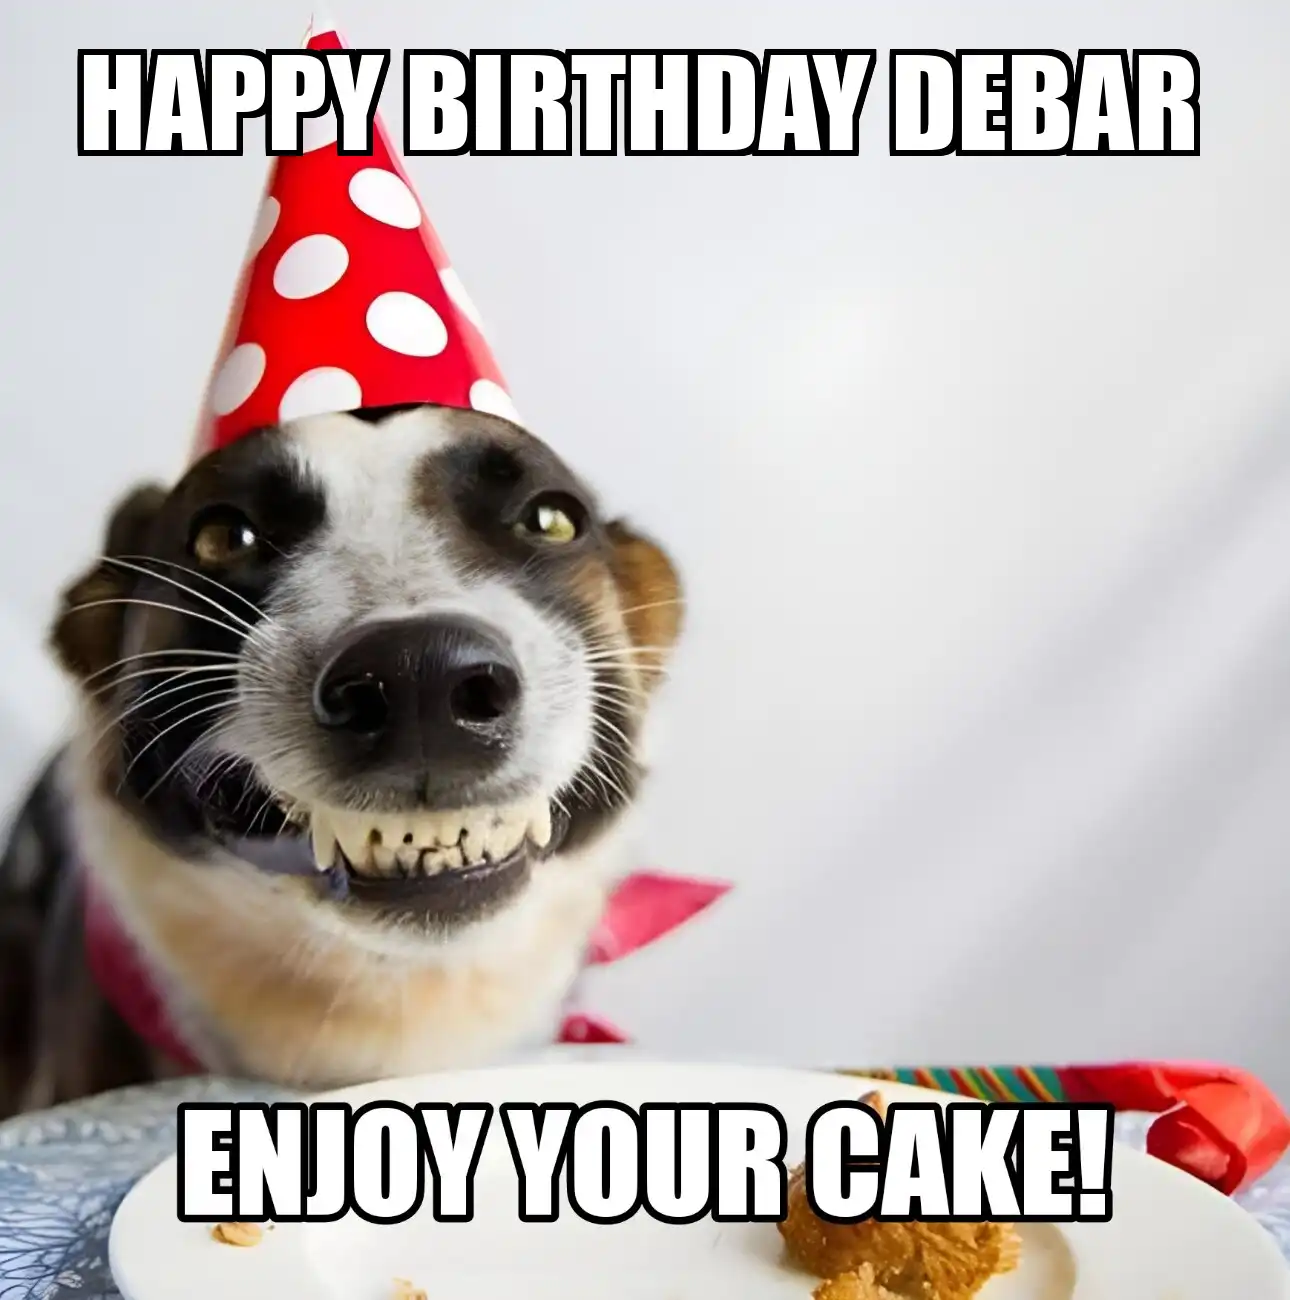 Happy Birthday Debar Enjoy Your Cake Dog Meme